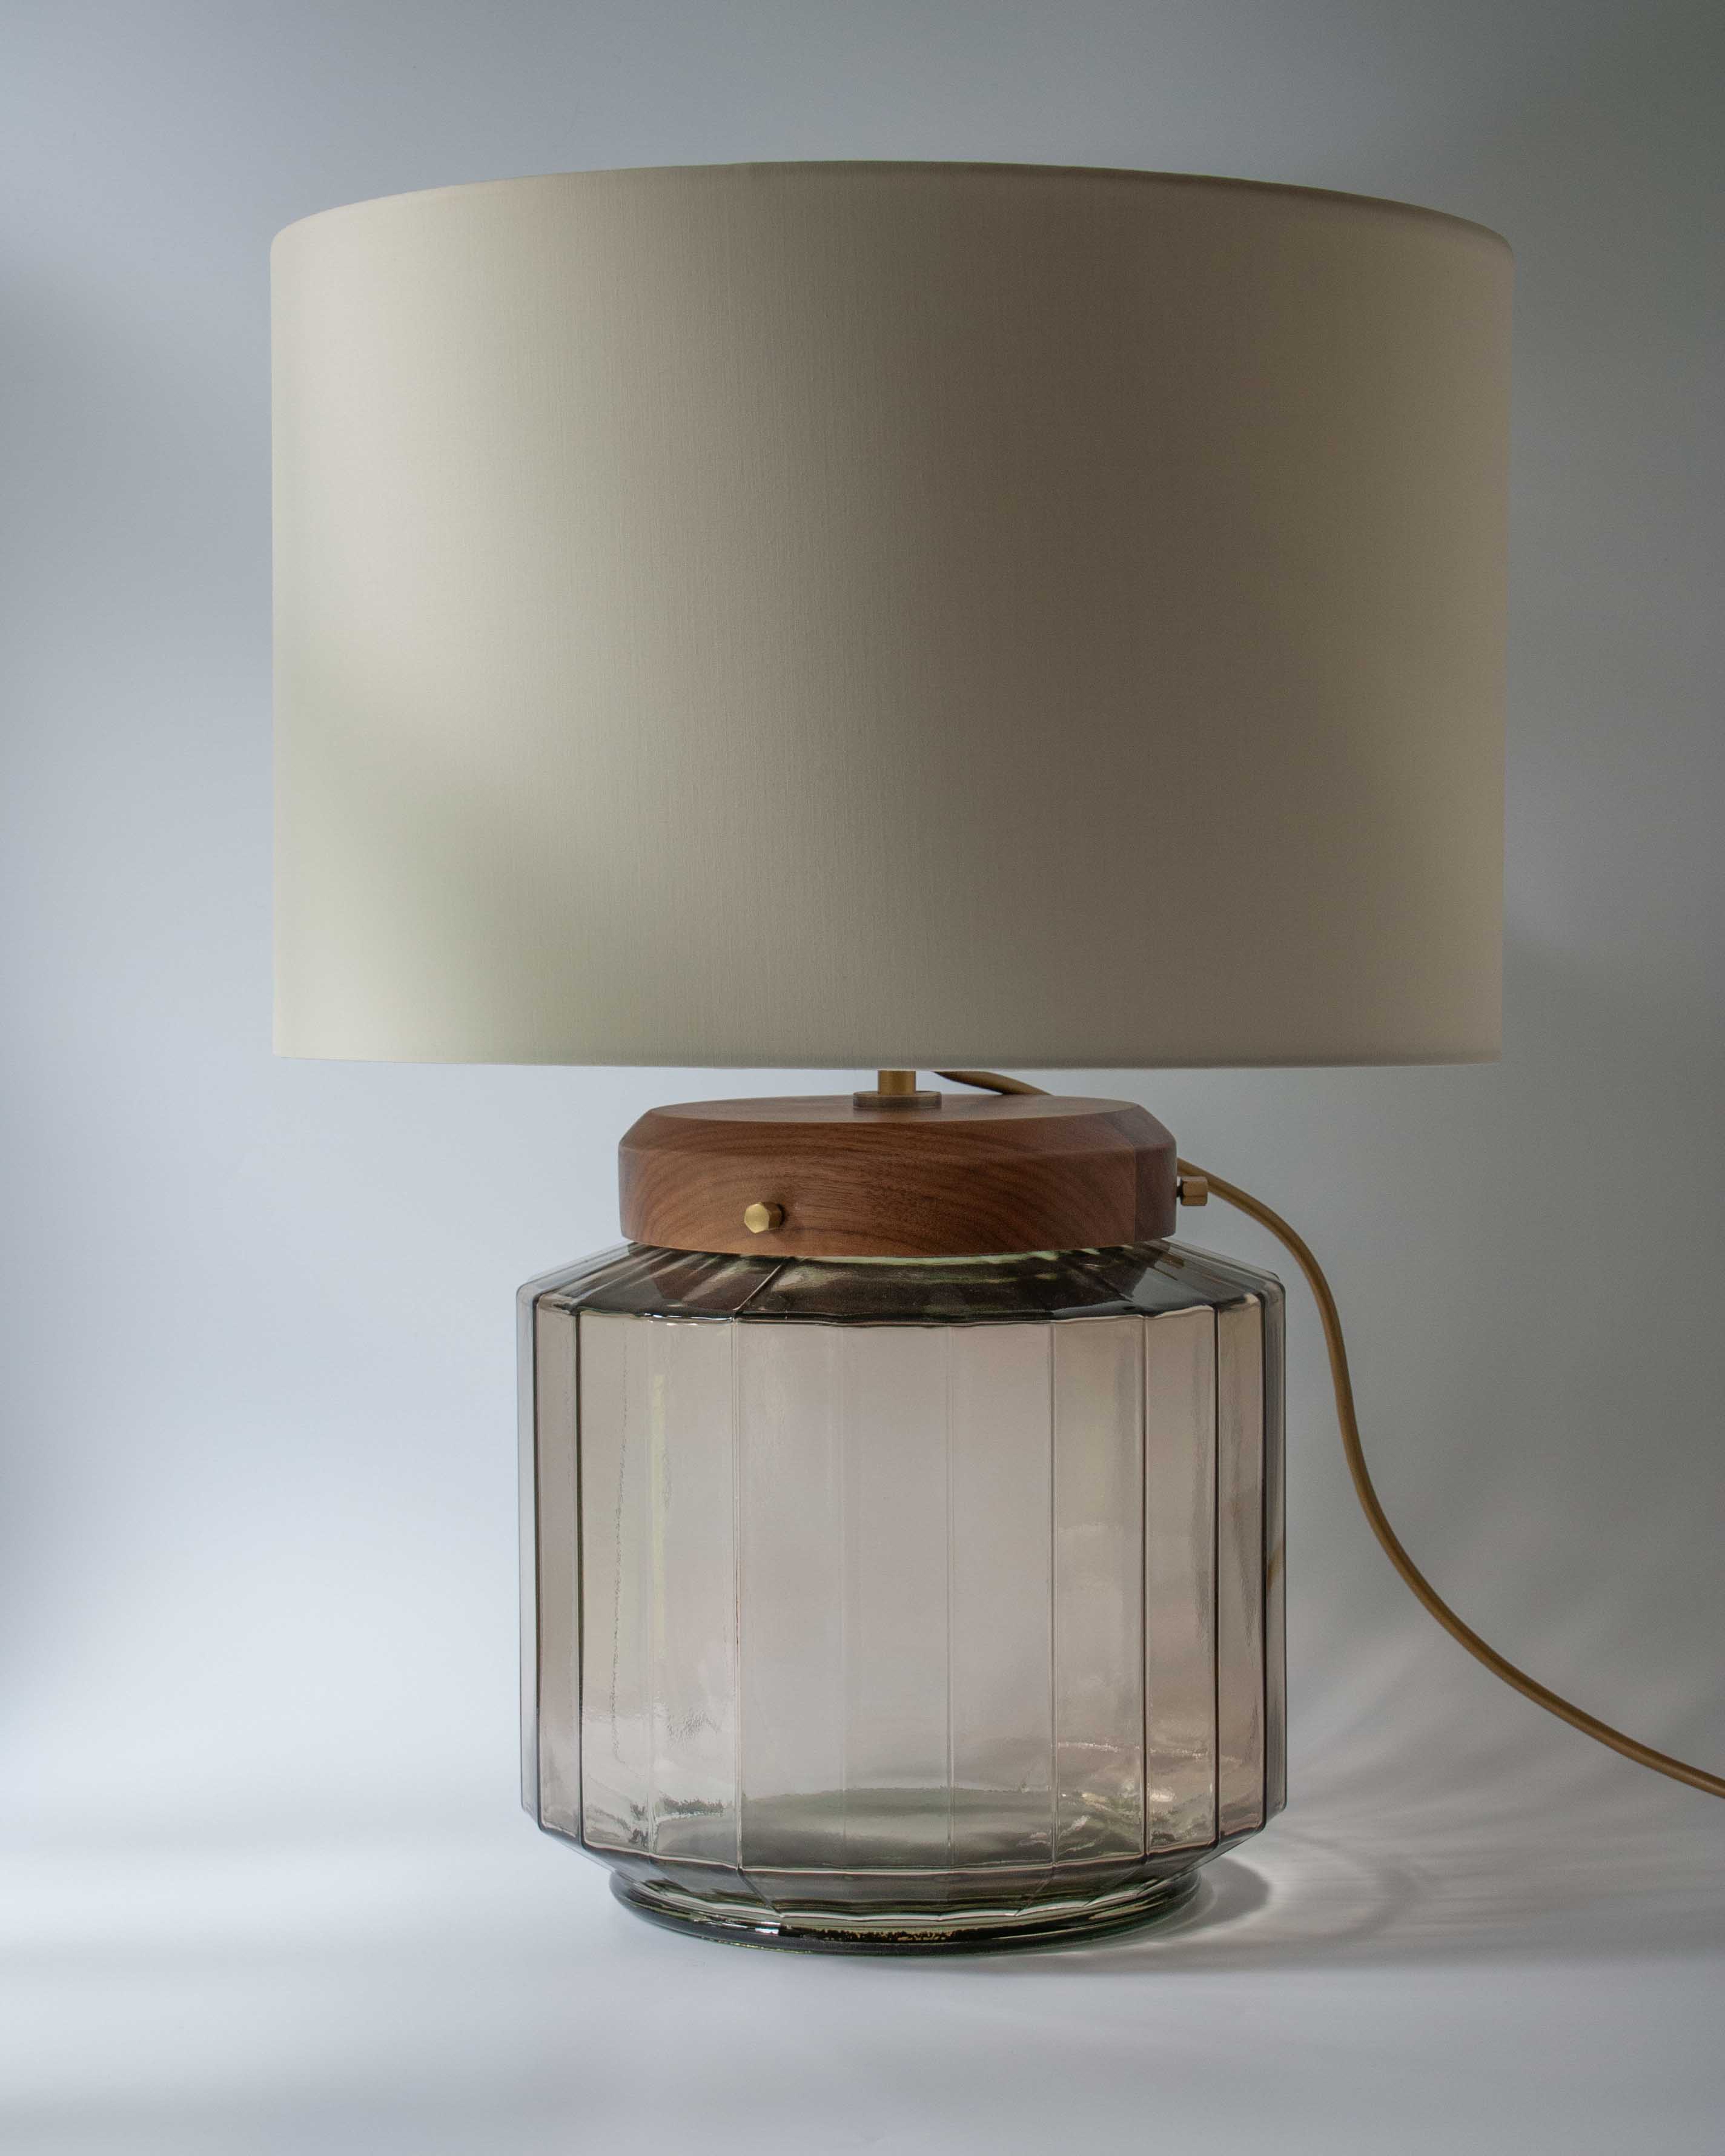 Octavia Table Lamp